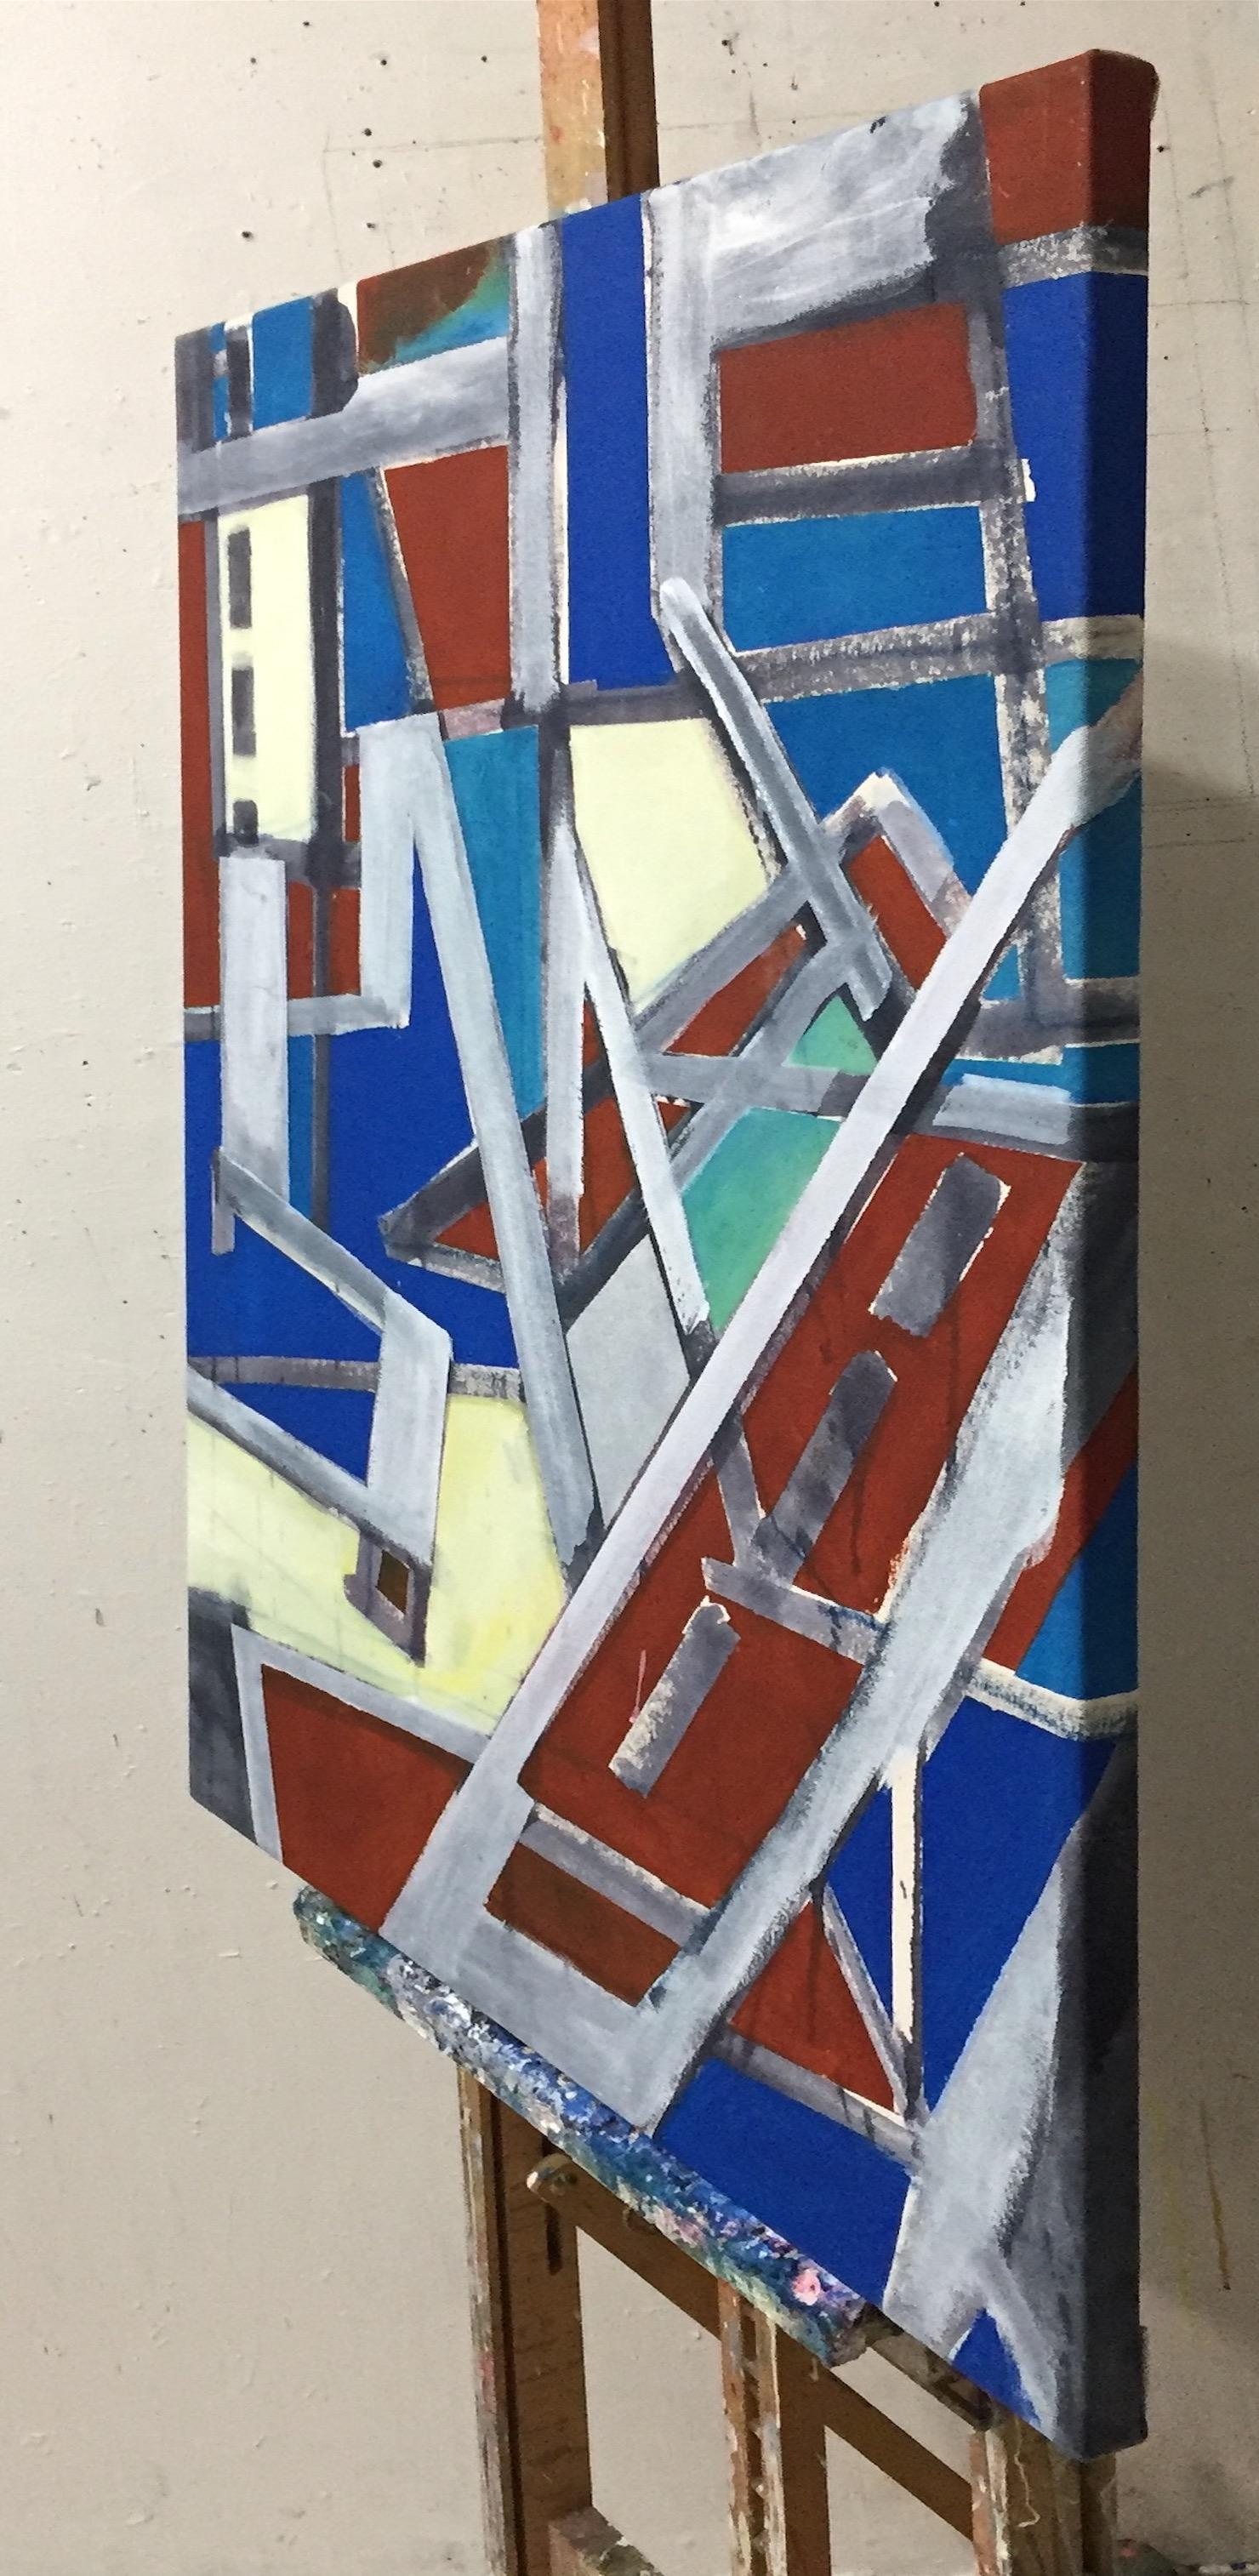 City Block Series #2, East Village New York (Geometric Abstract) - Painting by Robert Petrick